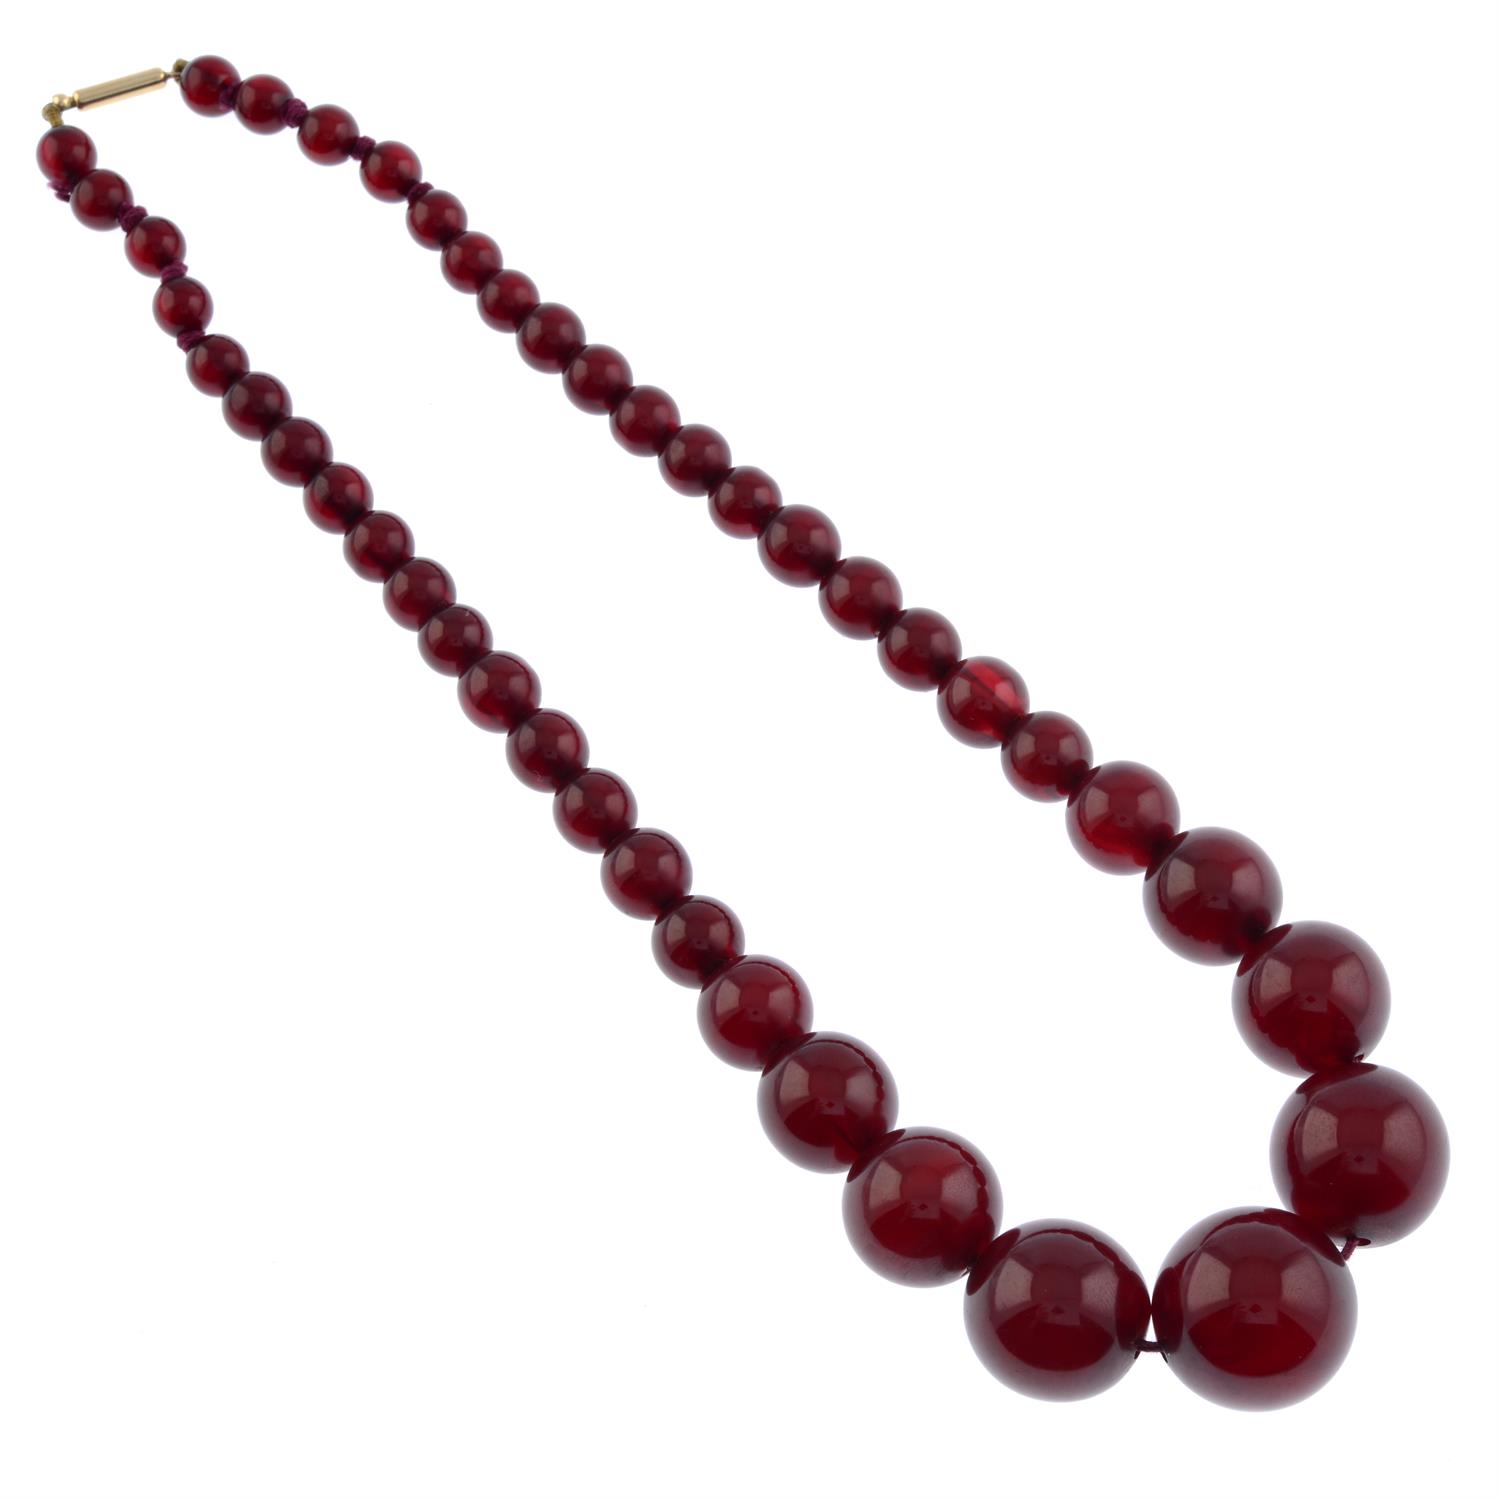 Bakelite necklace - Image 2 of 2